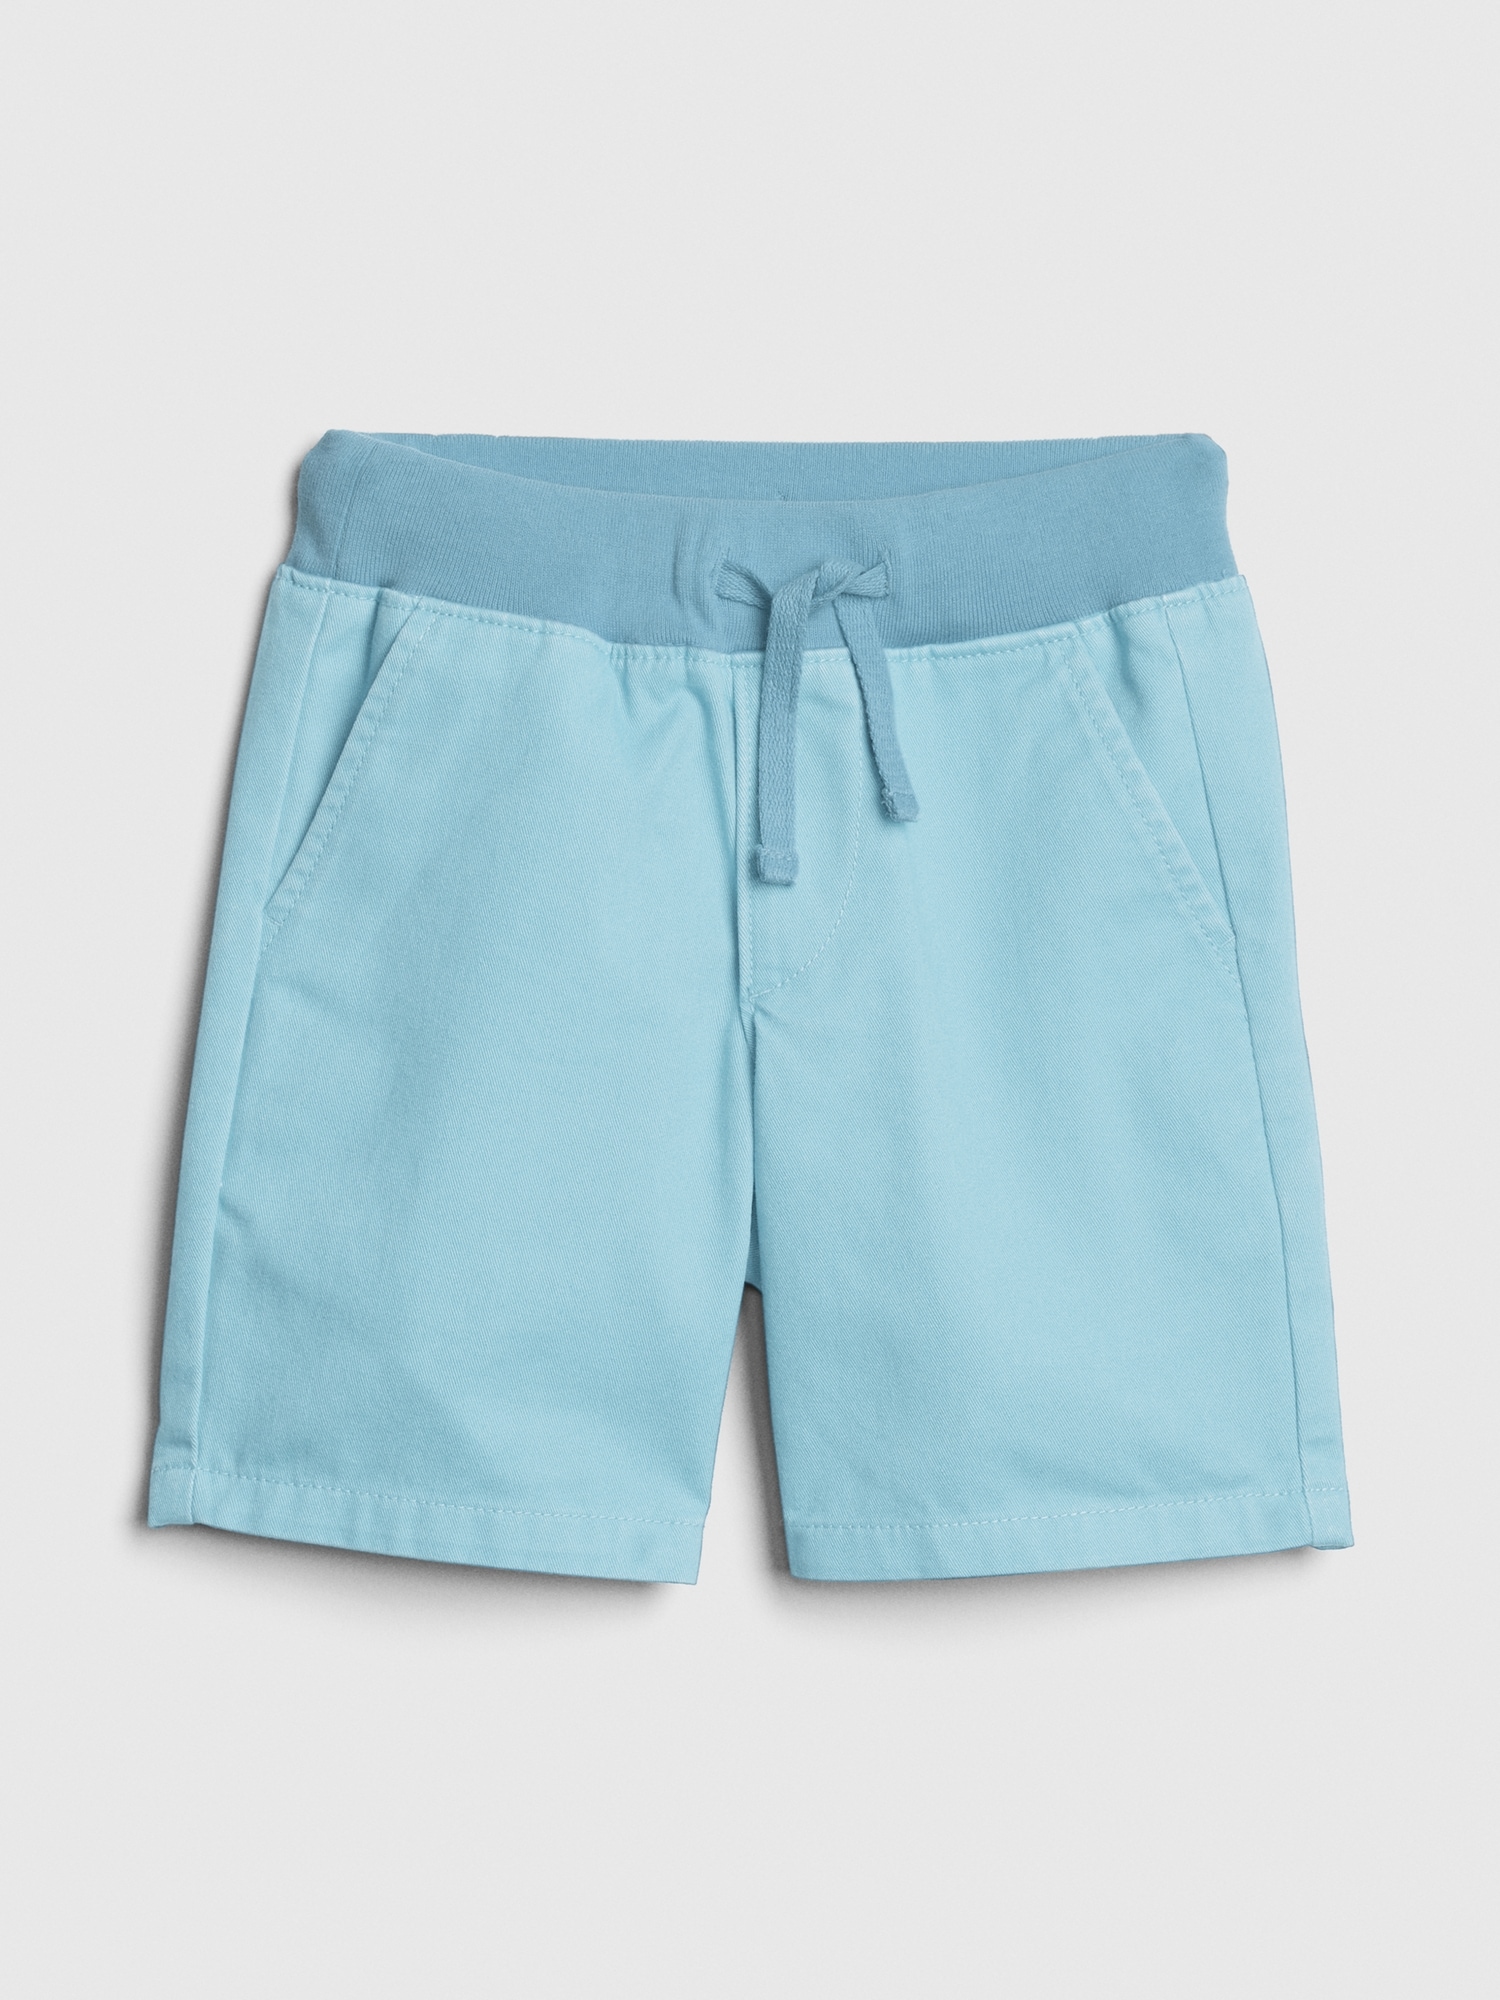 Toddler Pull-On Khaki Shorts | Gap